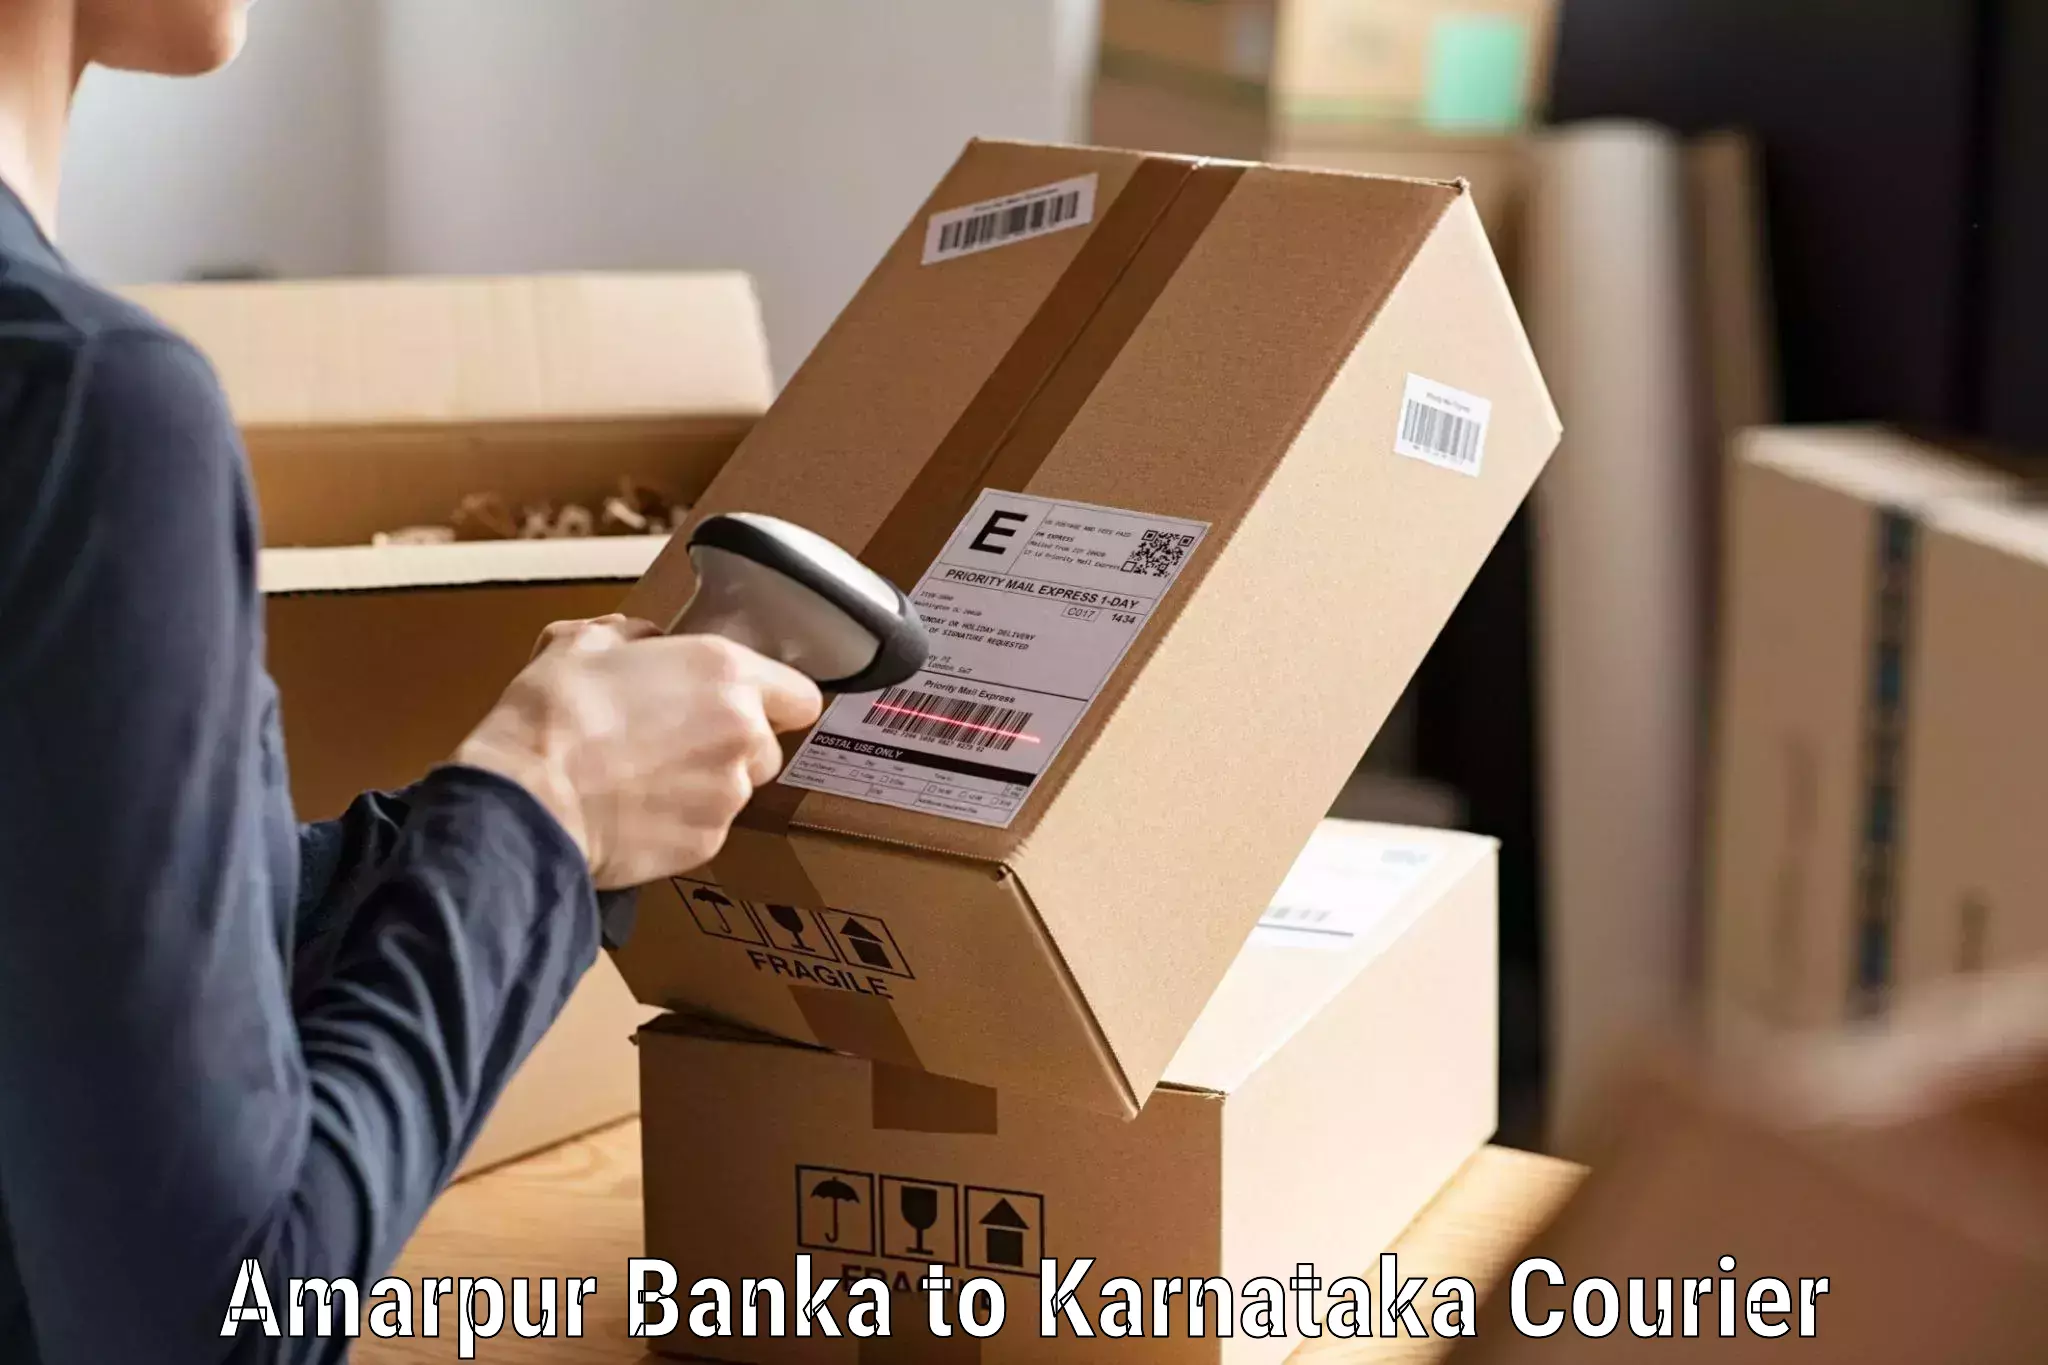 Global logistics network Amarpur Banka to Yenepoya Mangalore